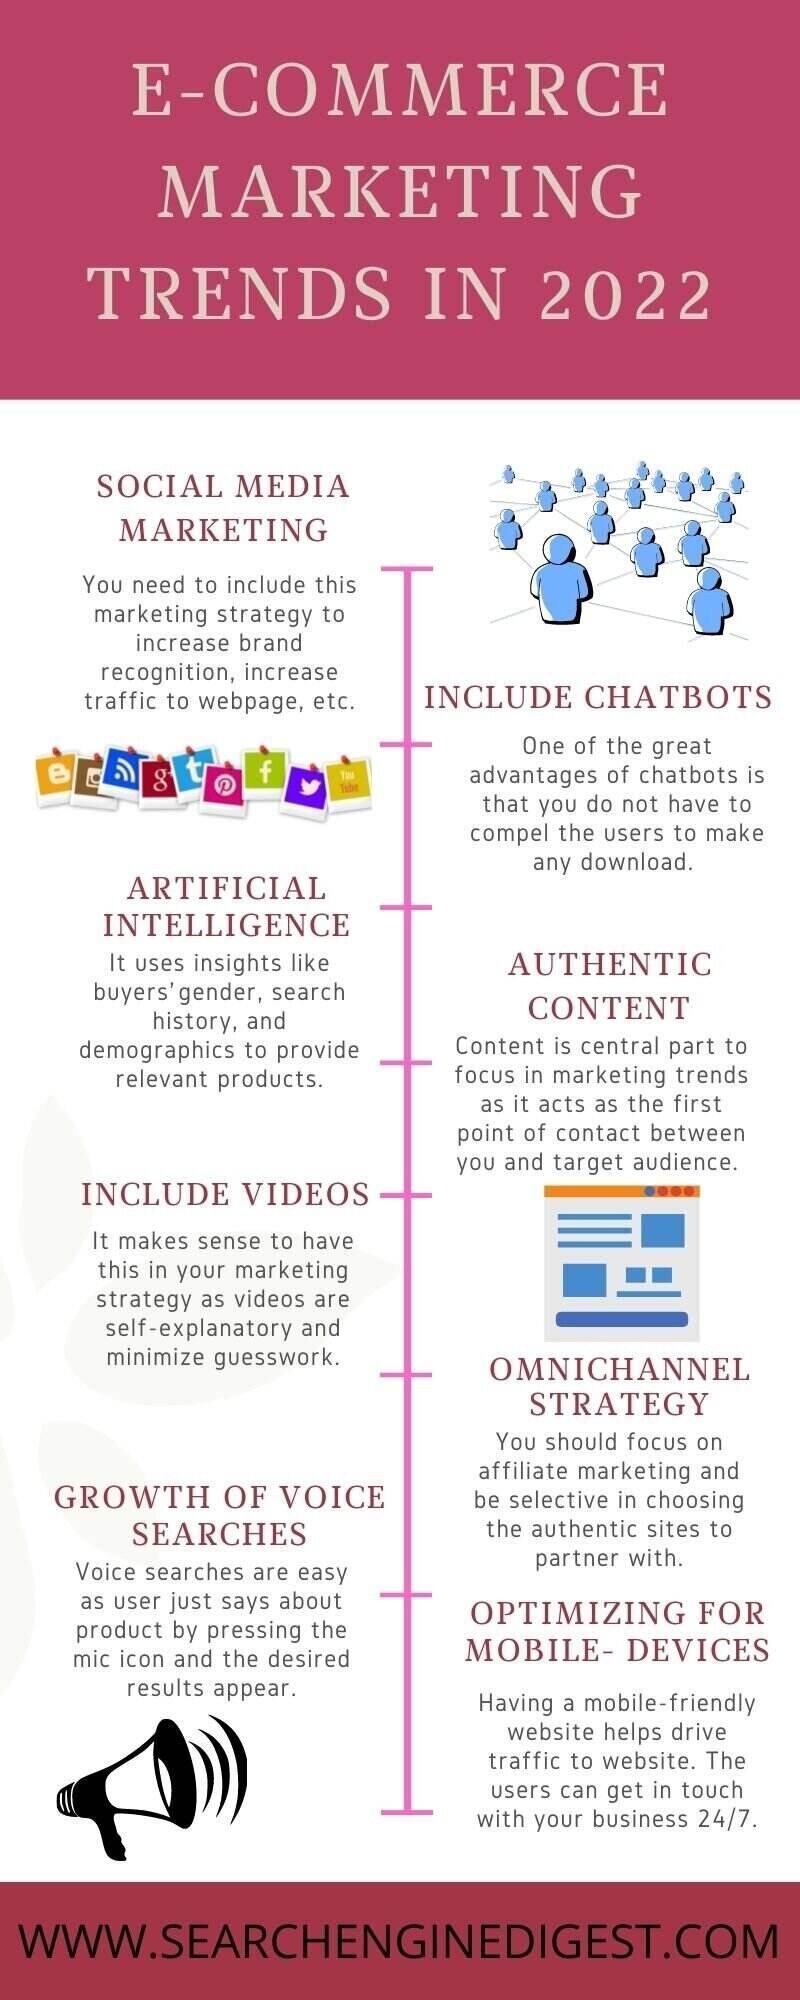 E-commerce marketing trends infographic